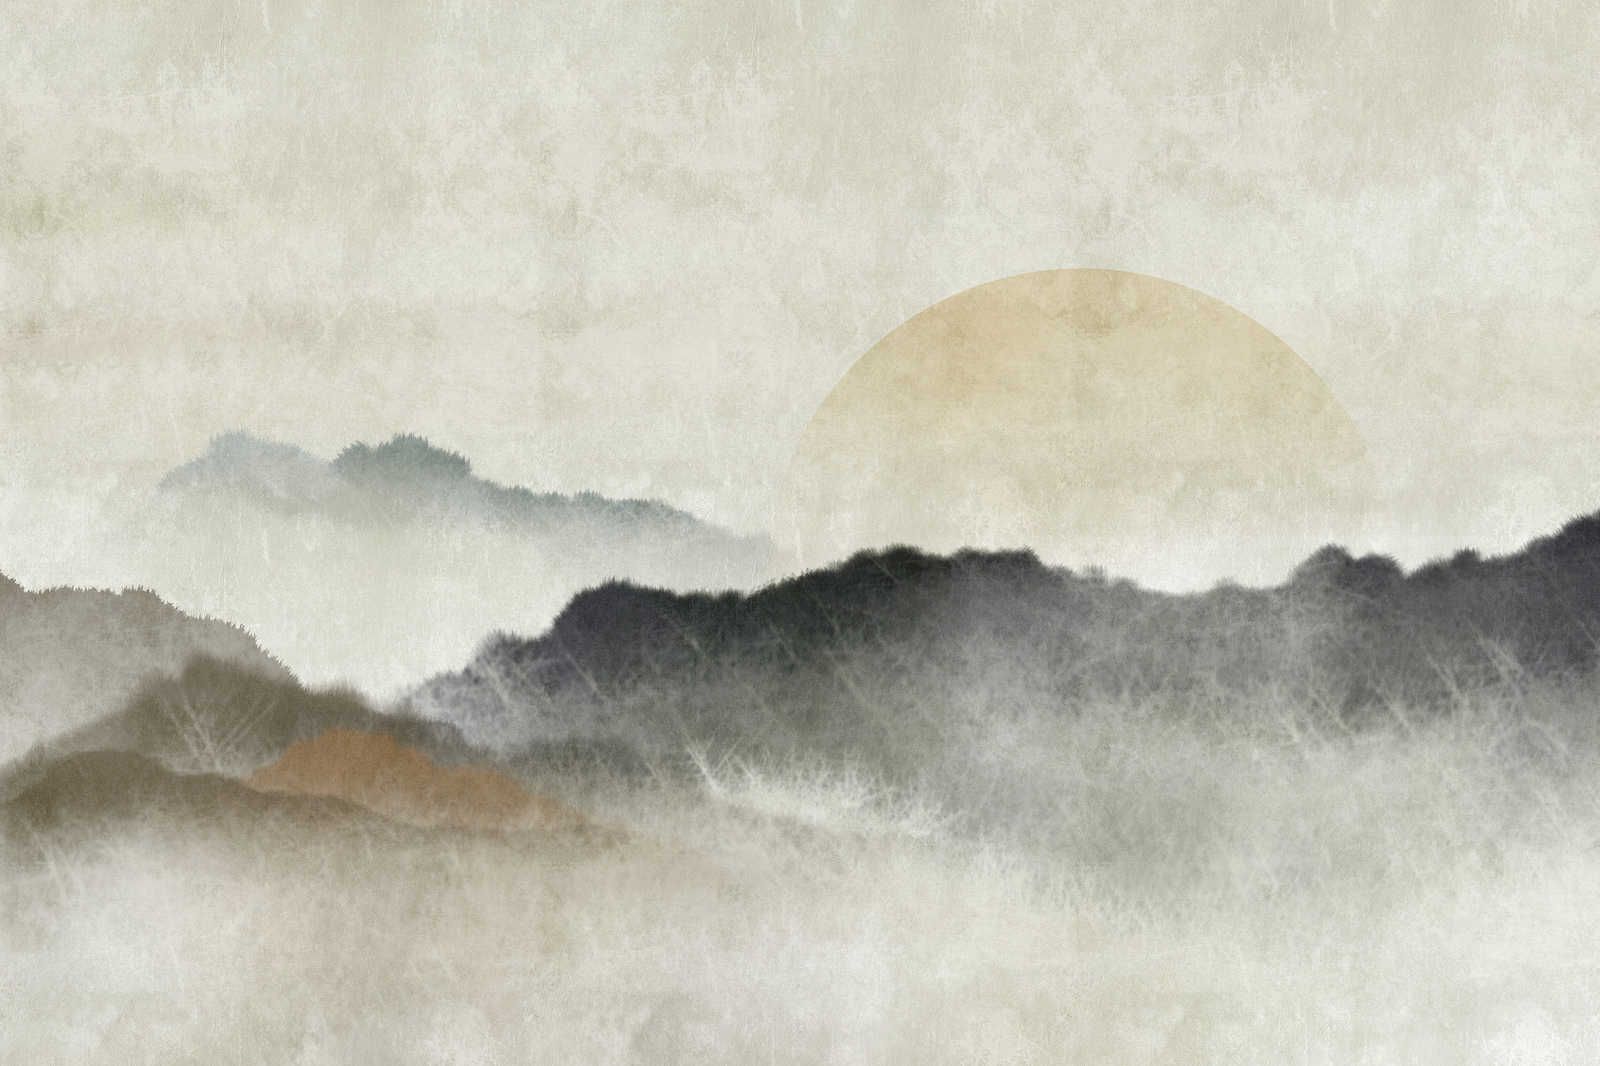             Akaishi 1 - Canvas painting Asian Print Mountain Range in Dawn - 0.90 m x 0.60 m
        